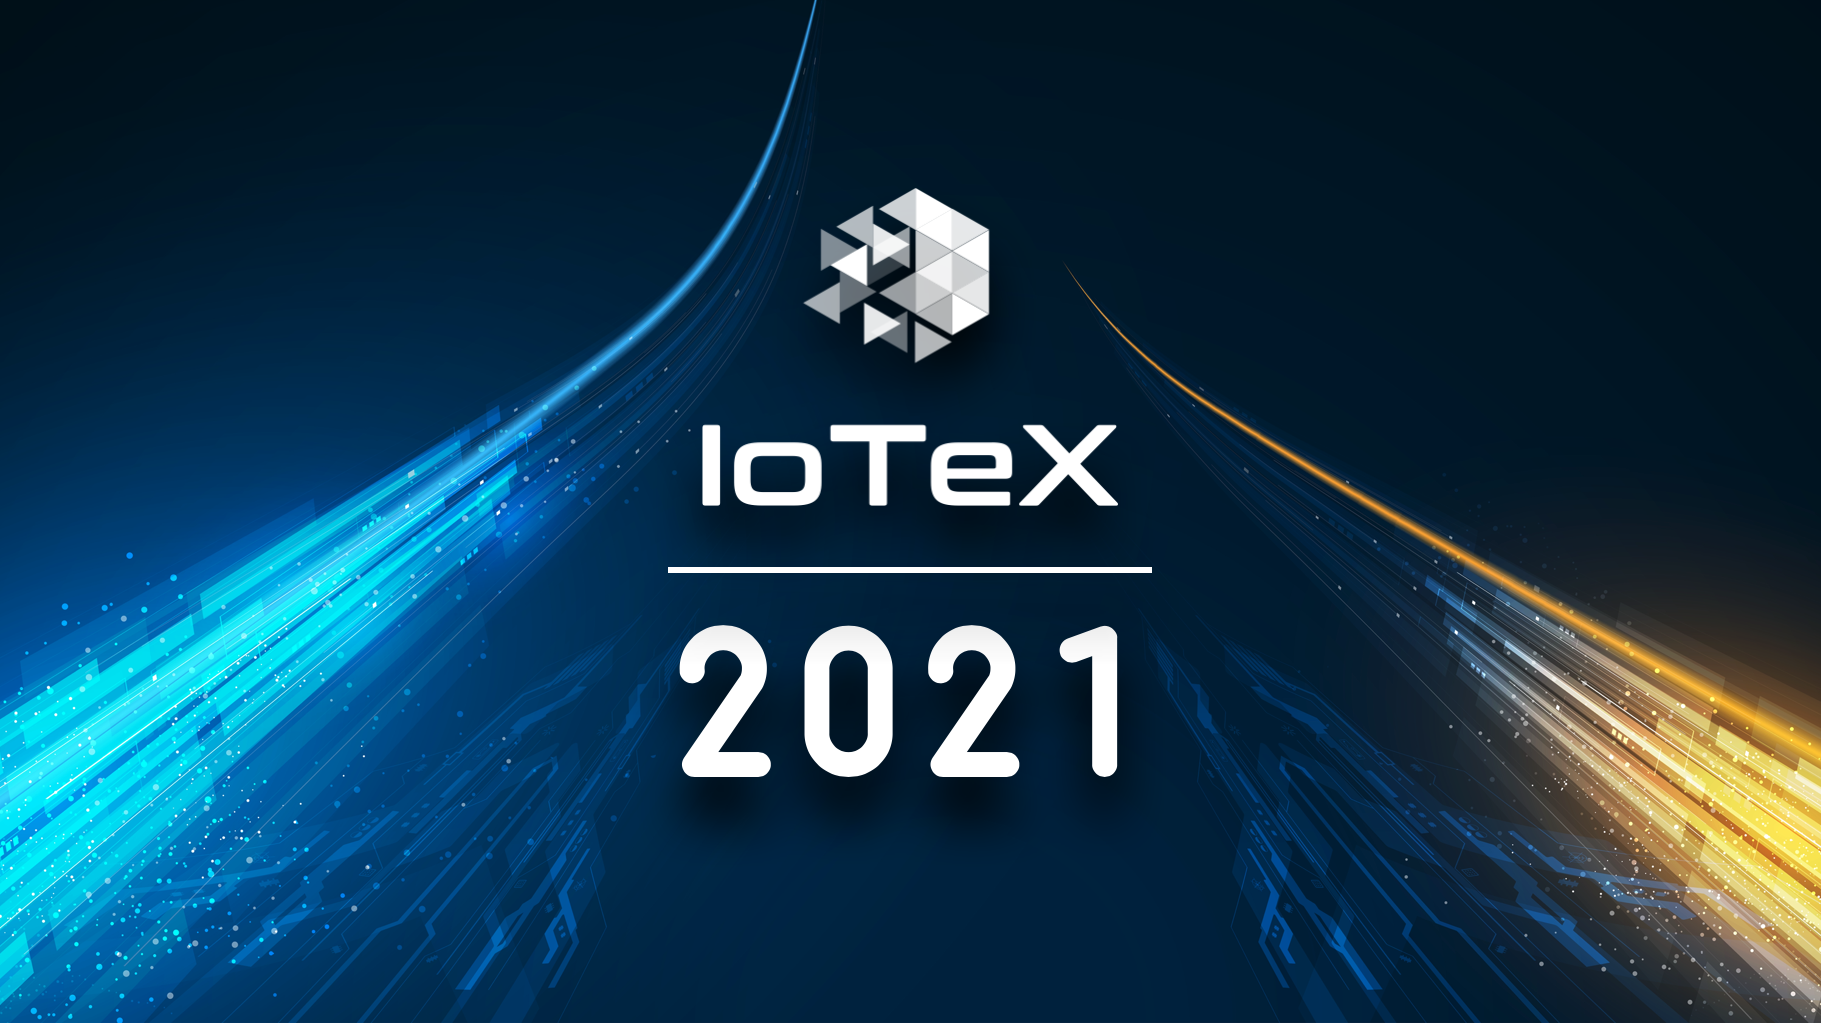 IoTeX 2021: The Year Ahead